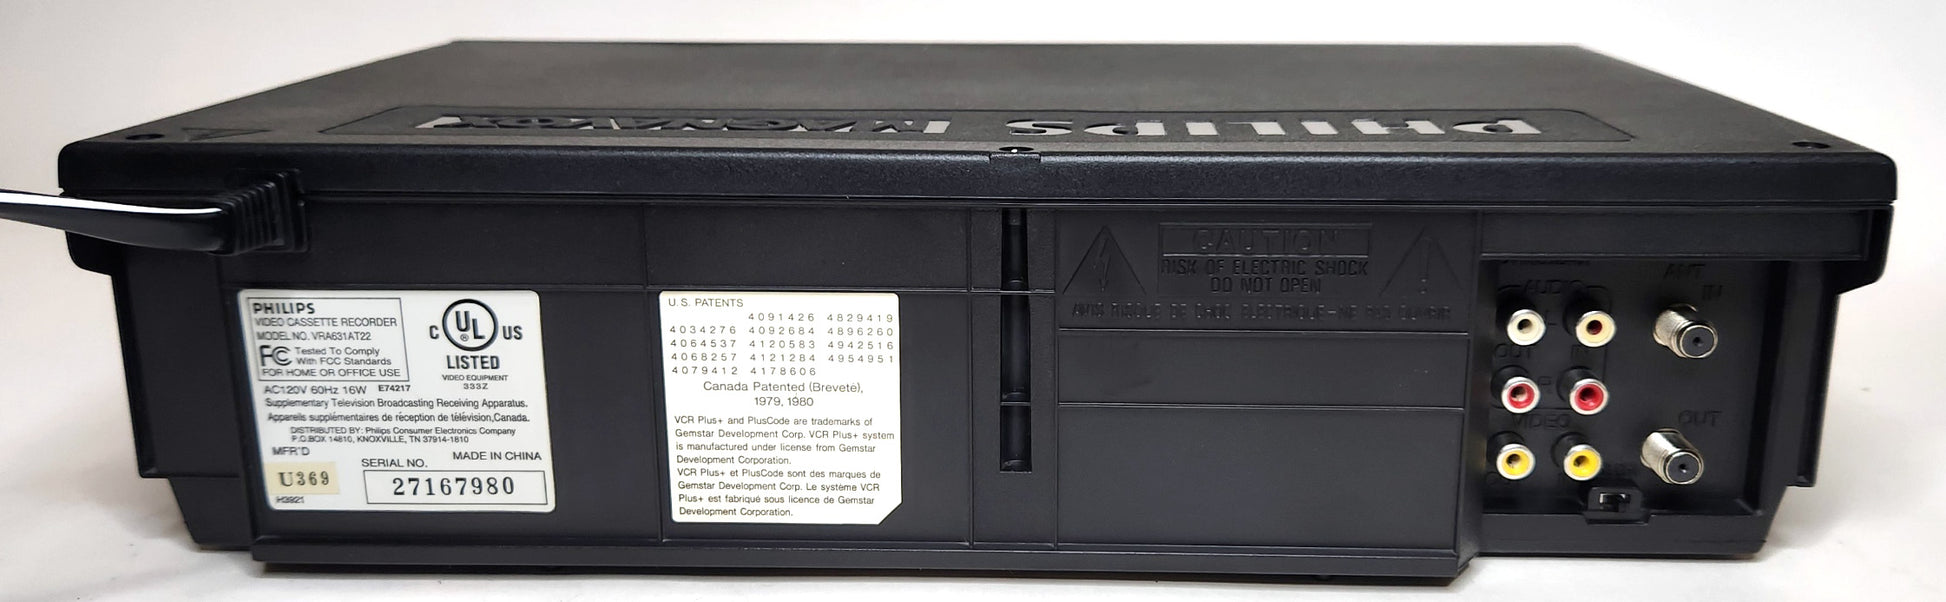 Philips Magnavox VRA631AT VCR, 4-Head Hi-Fi Stereo - Rear